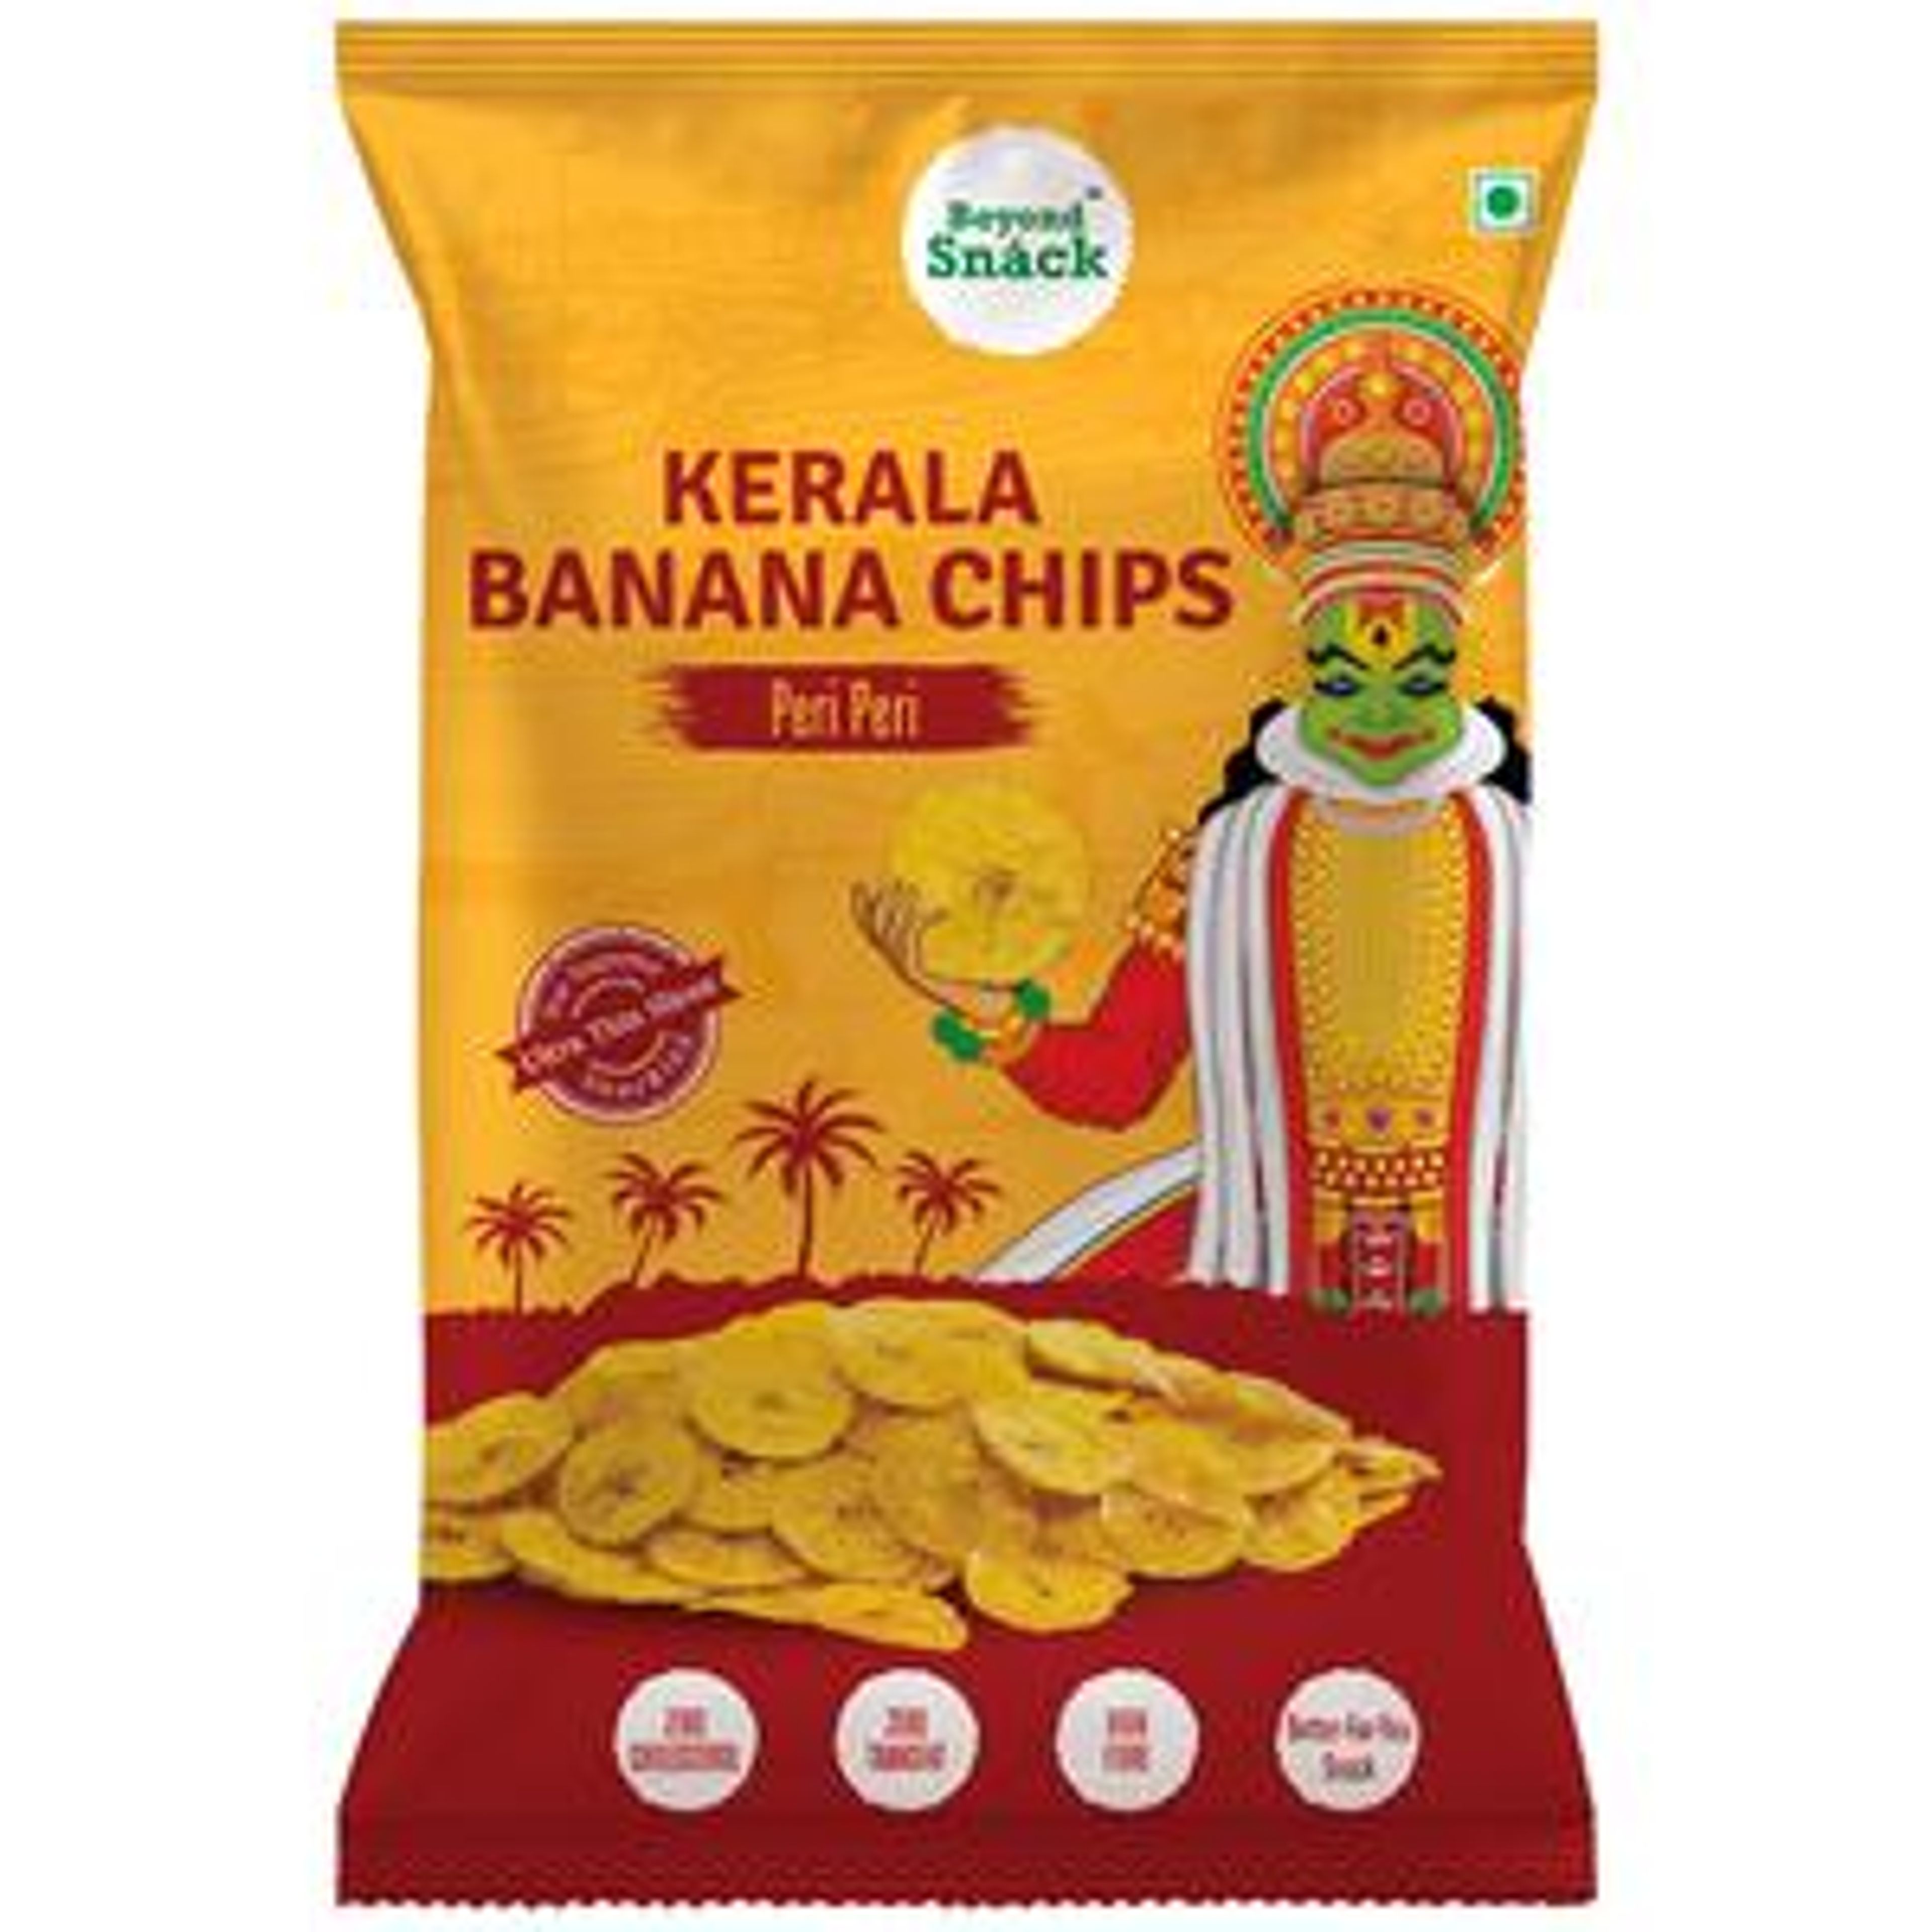 Beyond Snack Kerala Banana Chips - Peri Peri Flavour, Thin & Crispy, Zero Cholesterol 125 g 